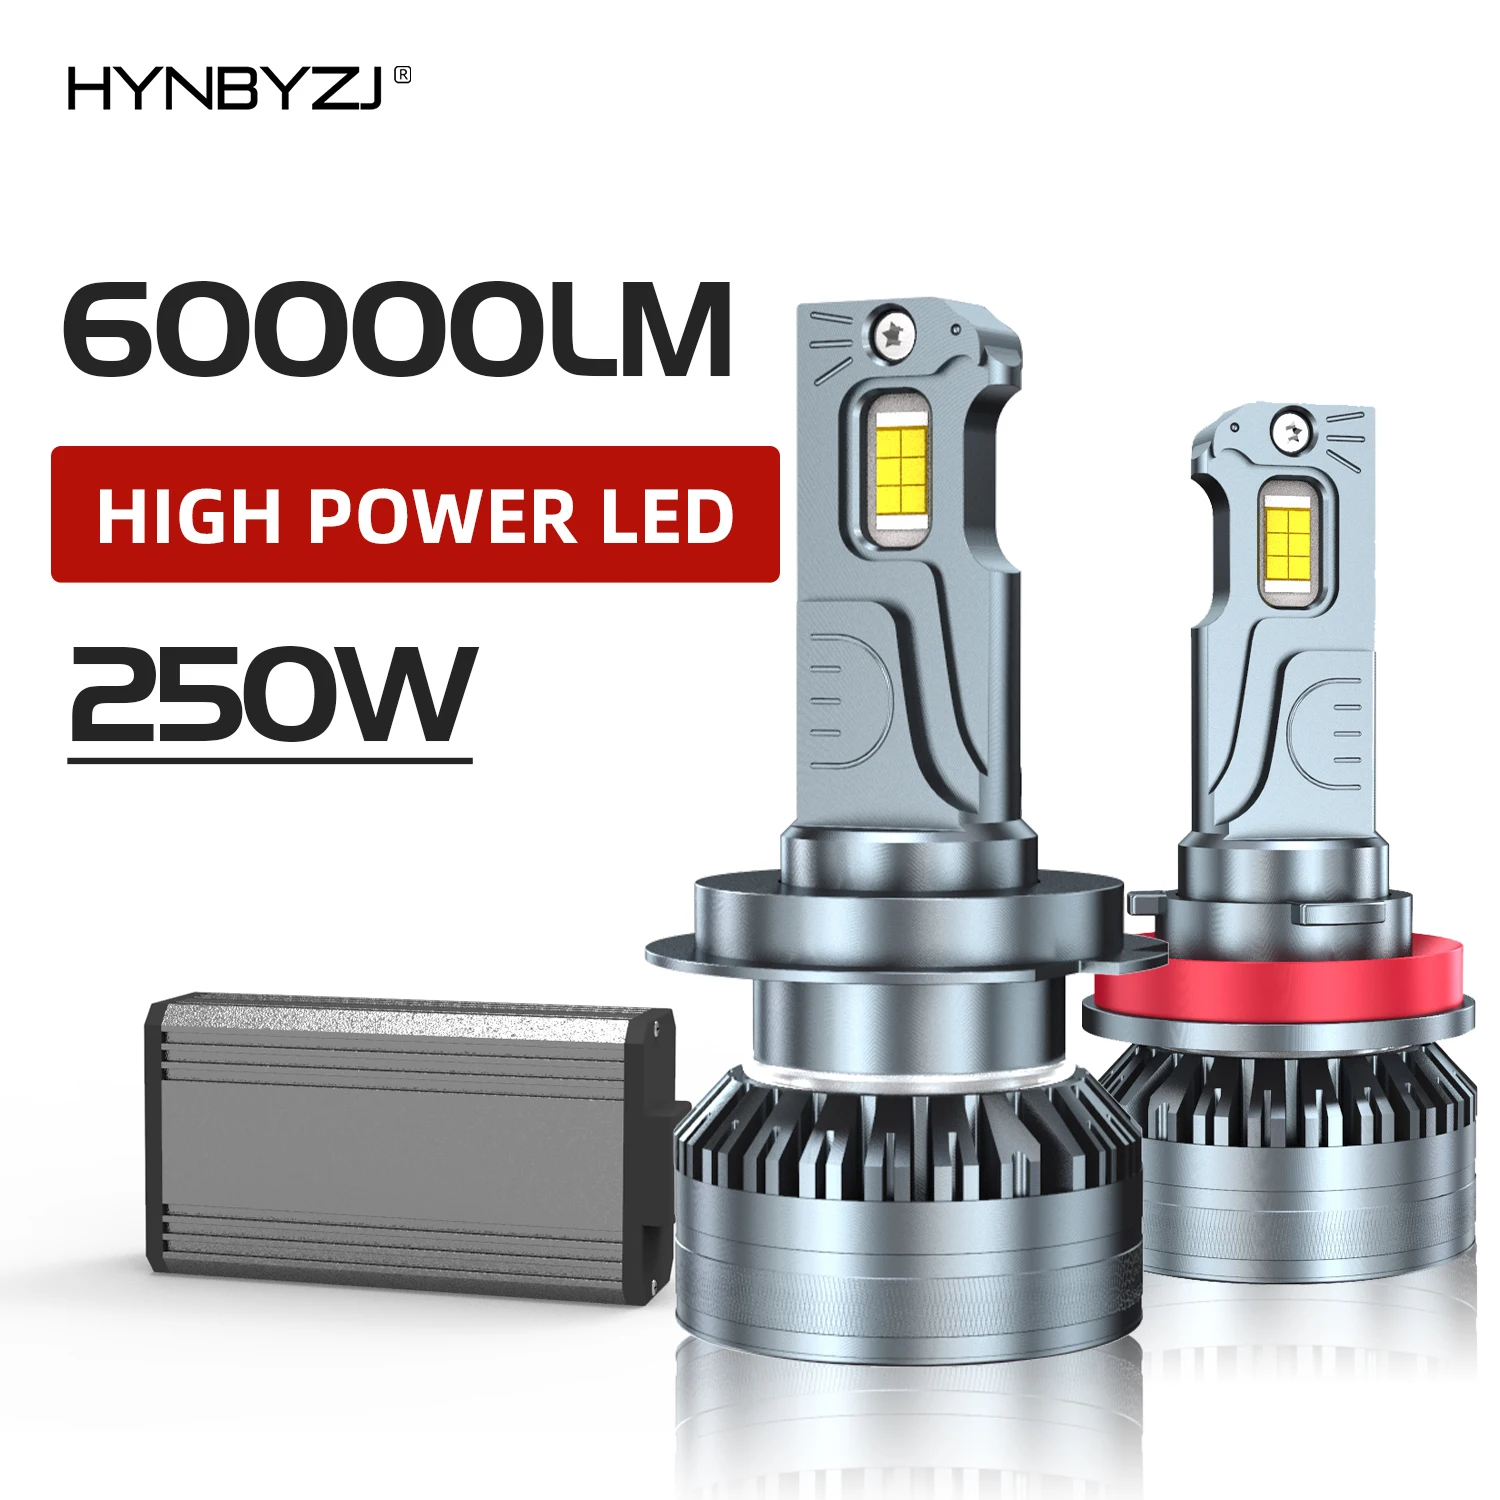 

HYNBYZJ 60000LM H7 H11 LED Headlight 250W High Power H1 H8 H9 HB4 HB3 9005 9006 9012 Turbo Lamp 6000K White Car Light